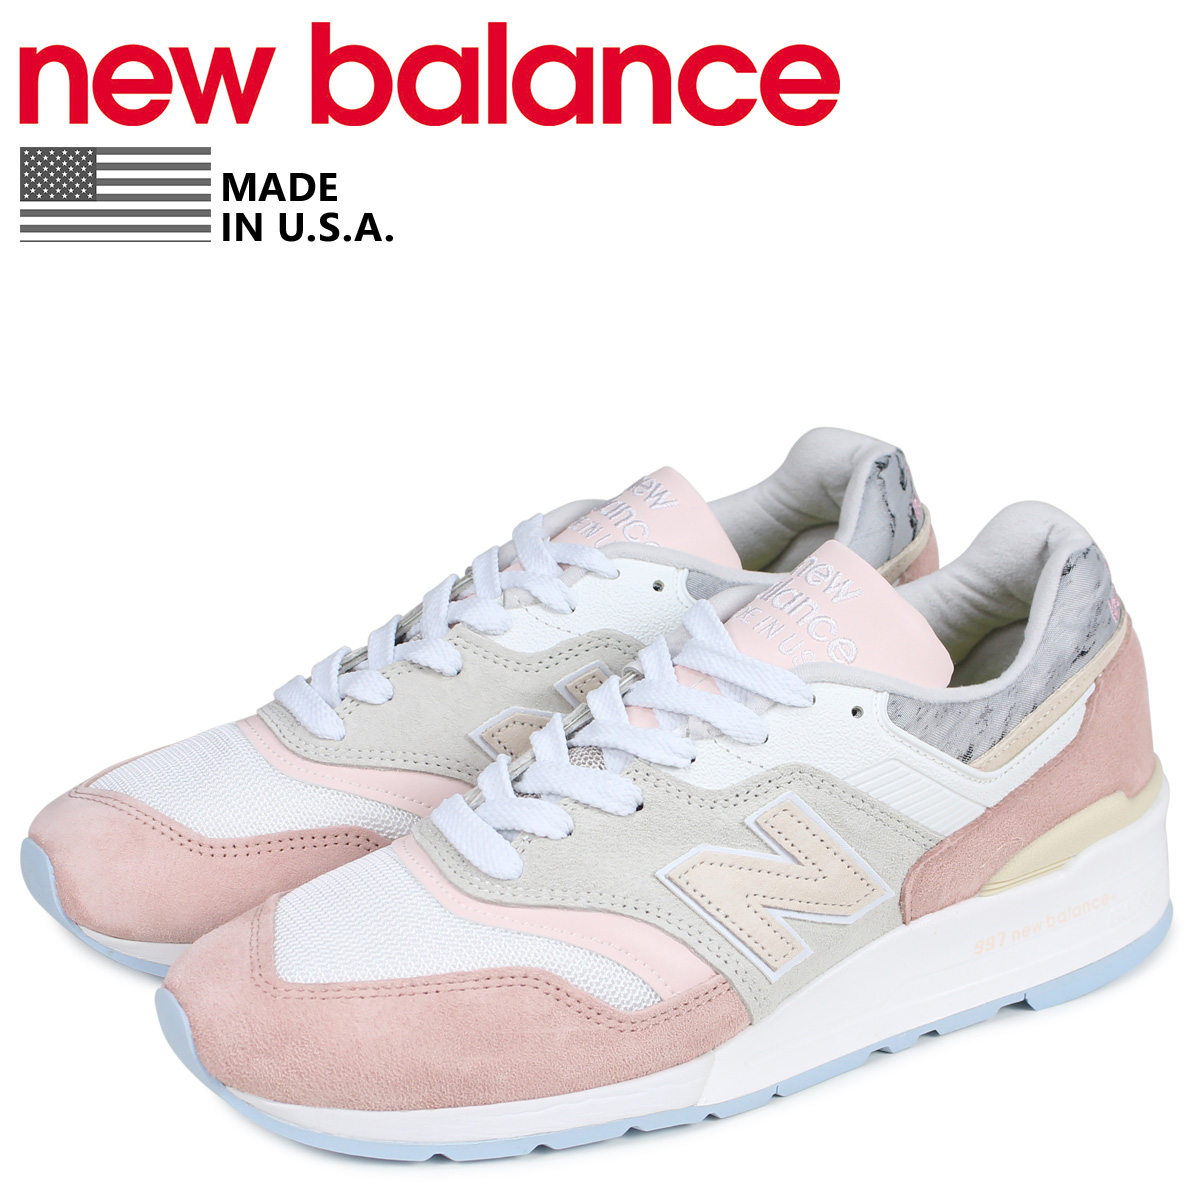 new balance 997 cinza e rosa